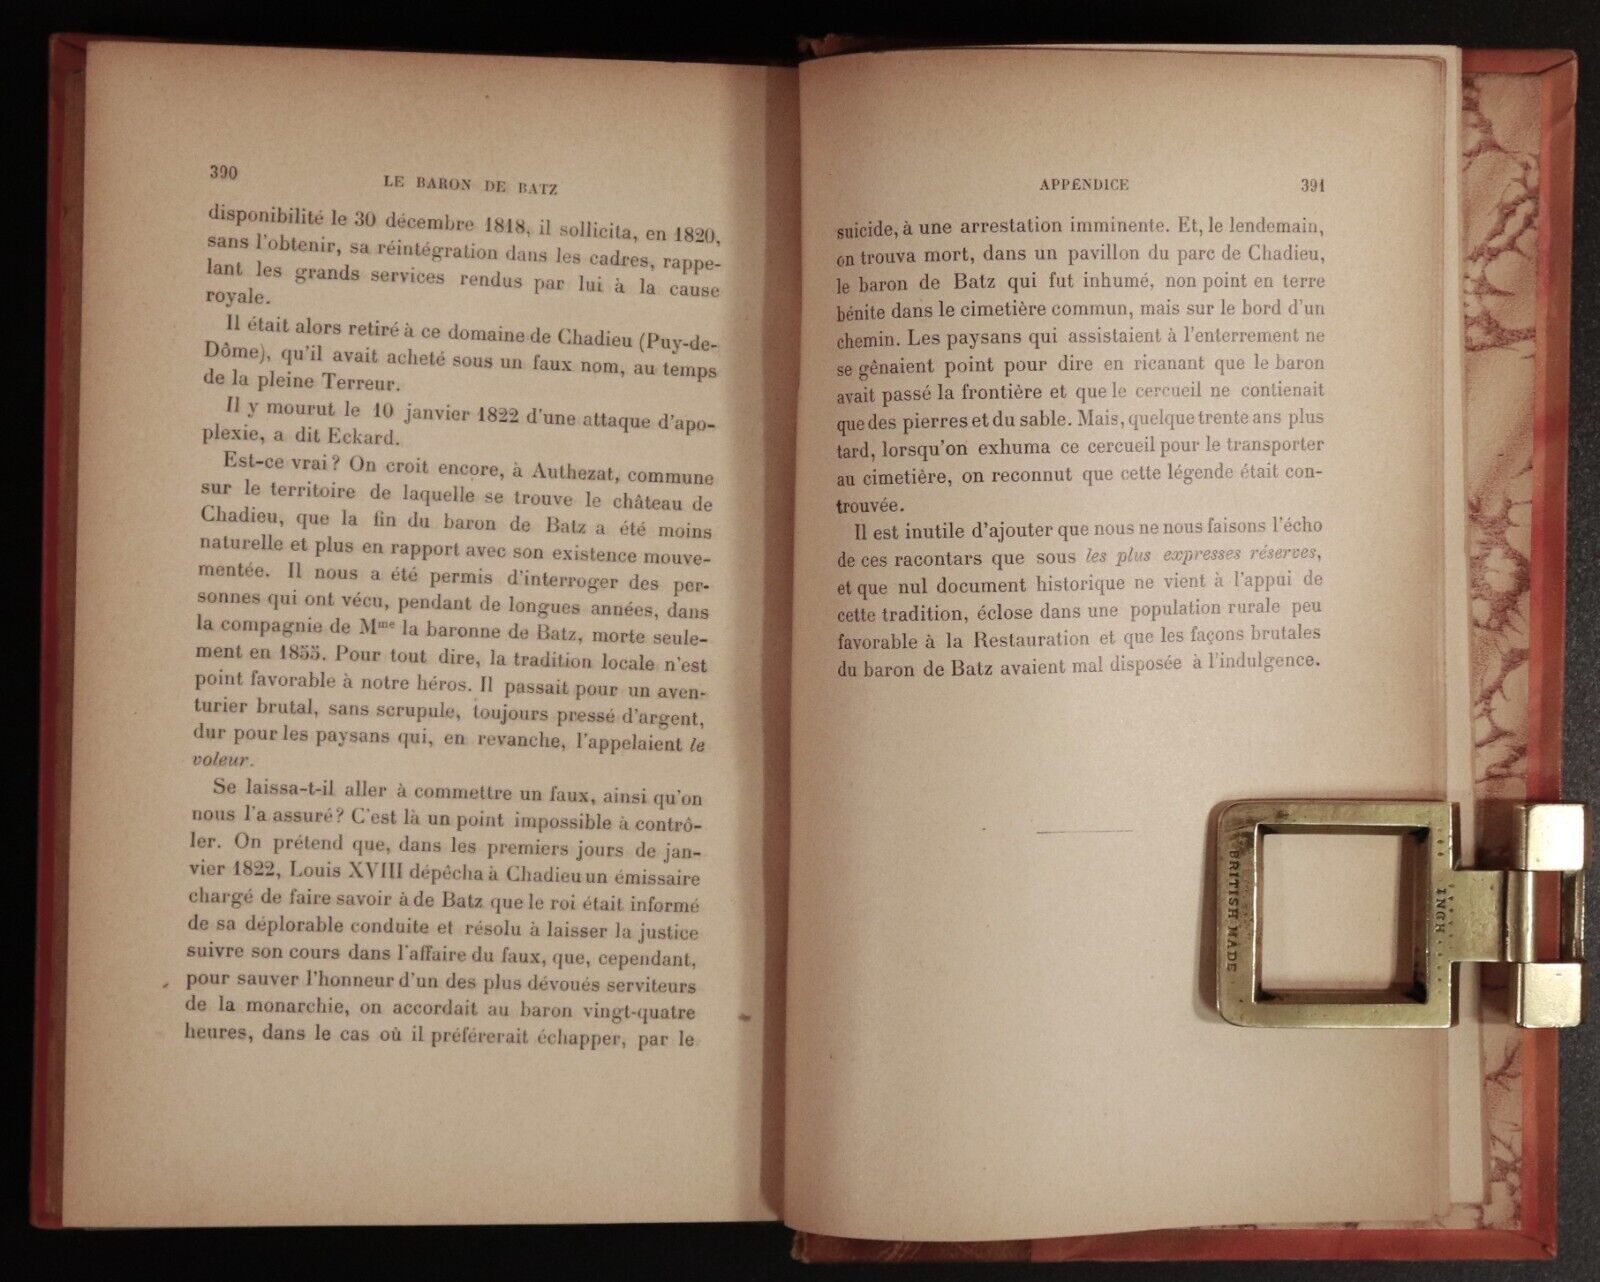 1902 Un Conspirateur Royaliste Baron de Batz Antique French Book Fine Binding